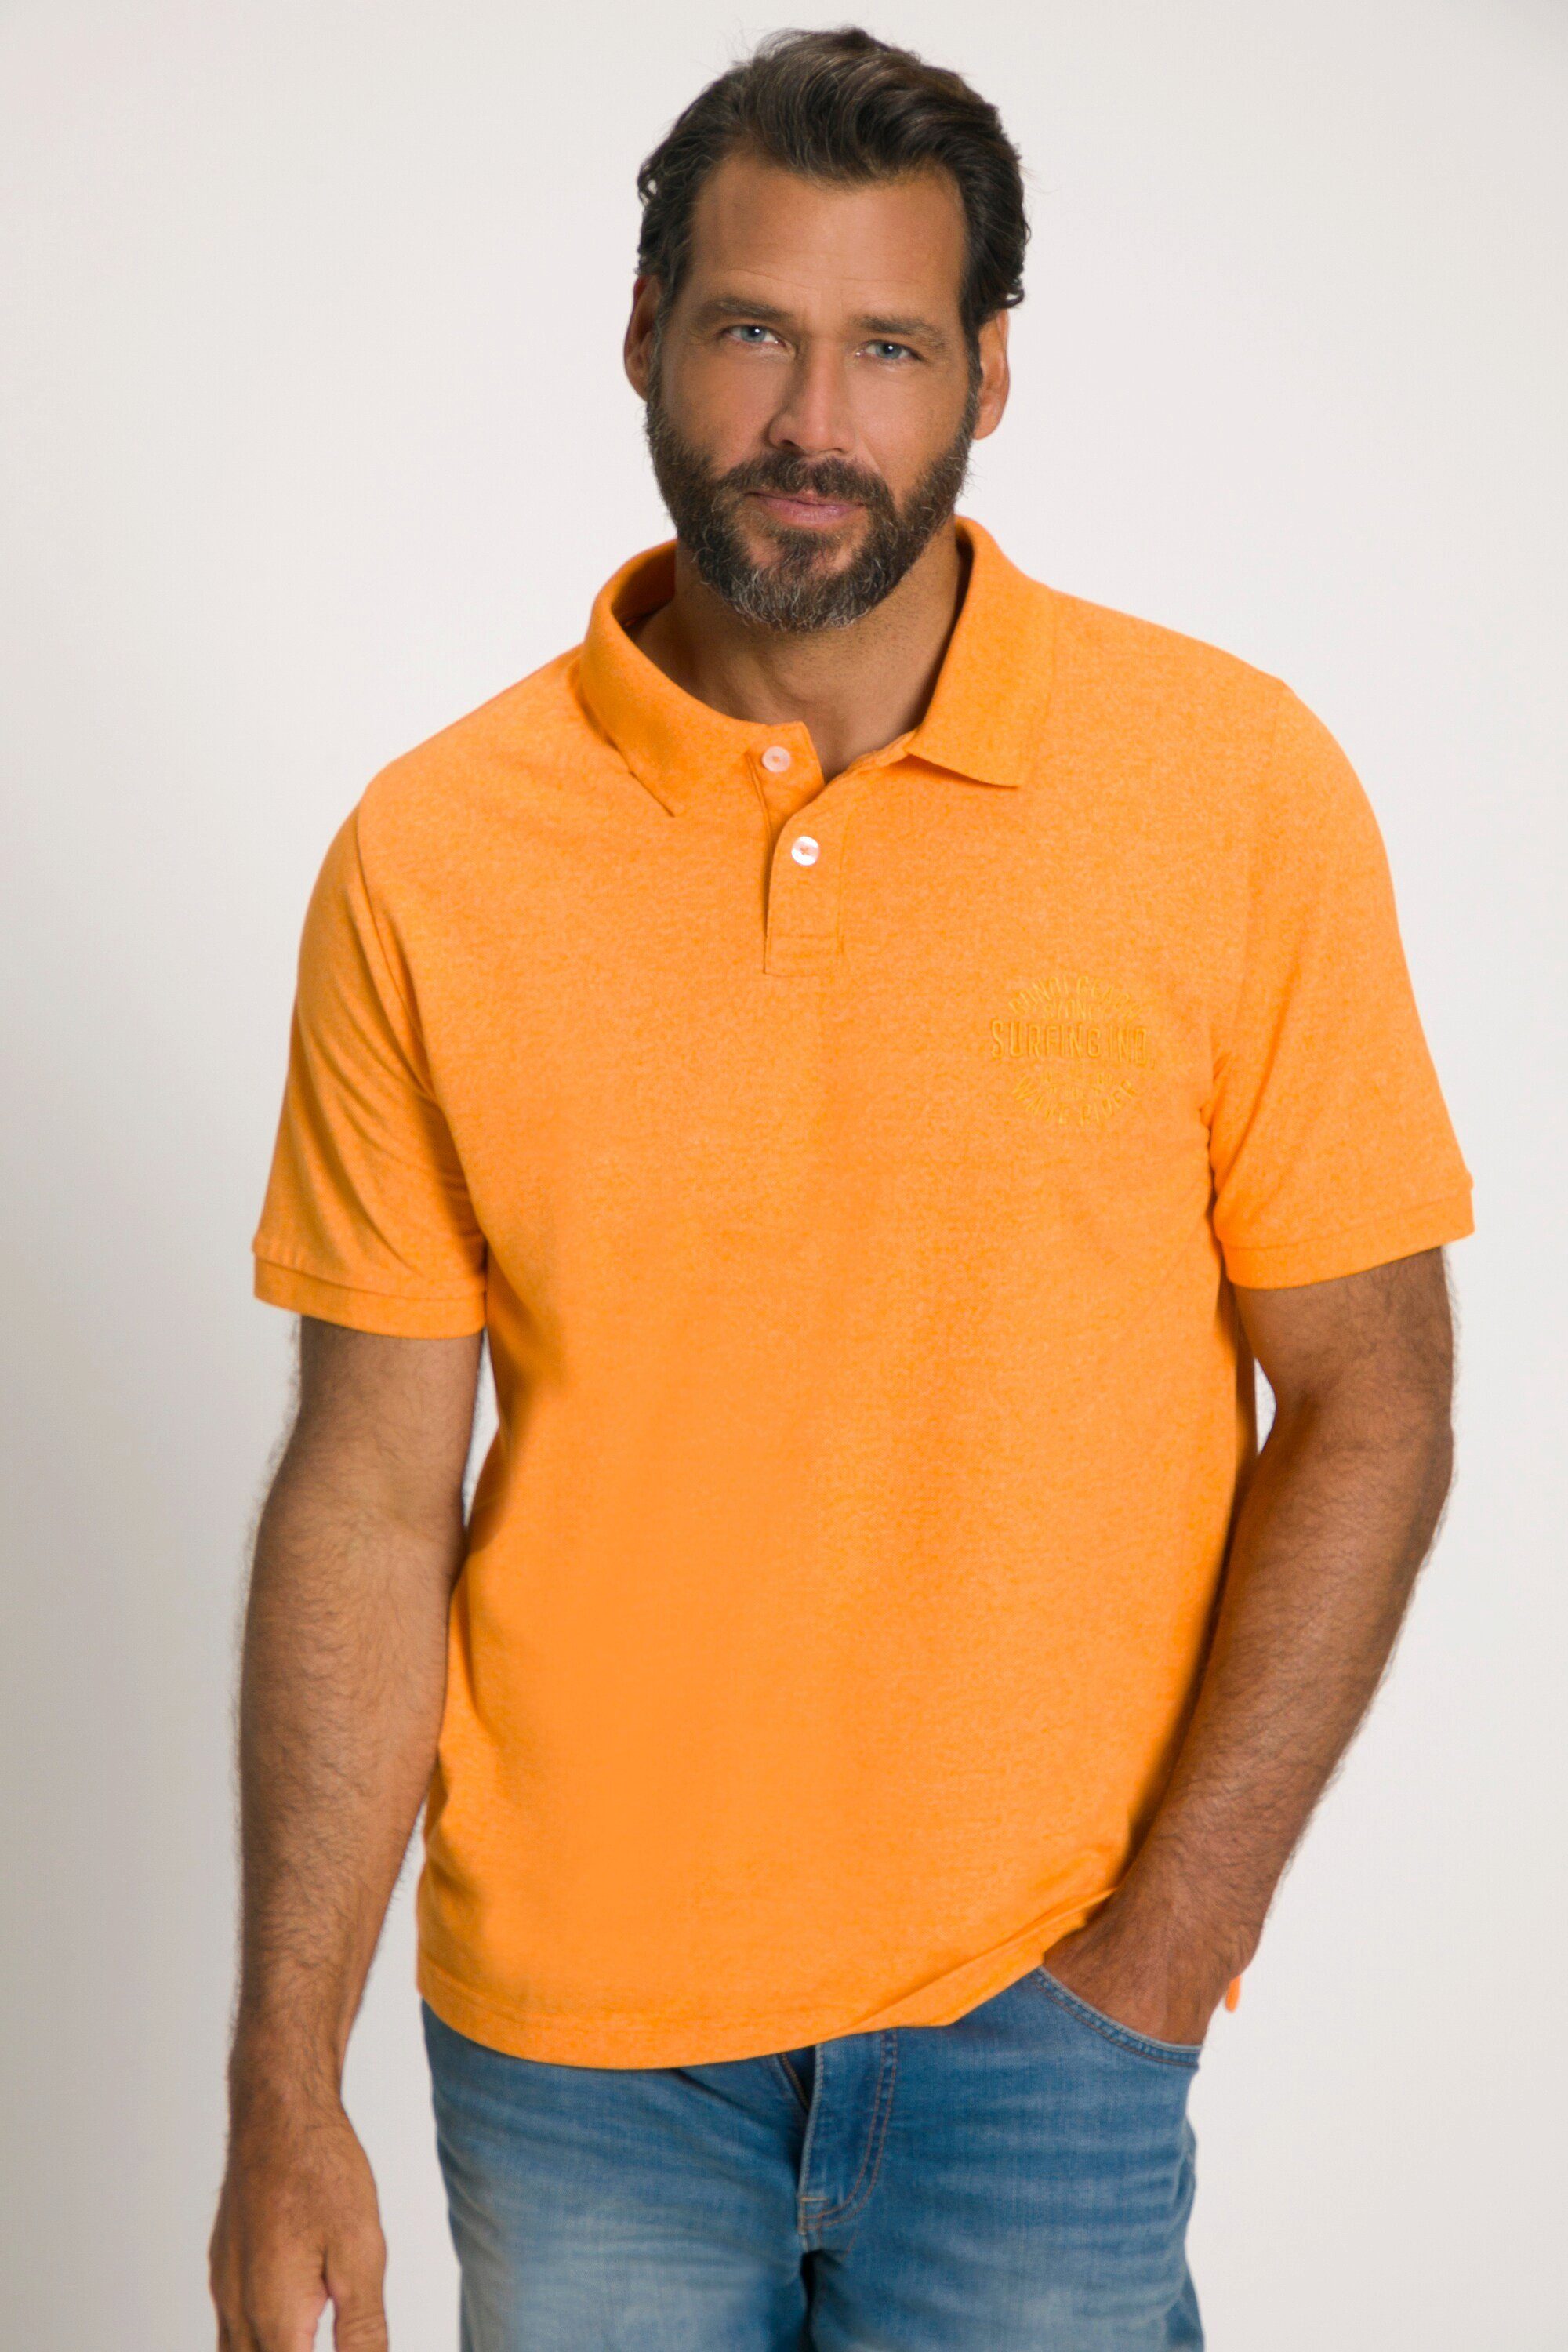 bis 8 XL Piqué orange kräftiges JP1880 Poloshirt Poloshirt Stickerei Halbarm 3D